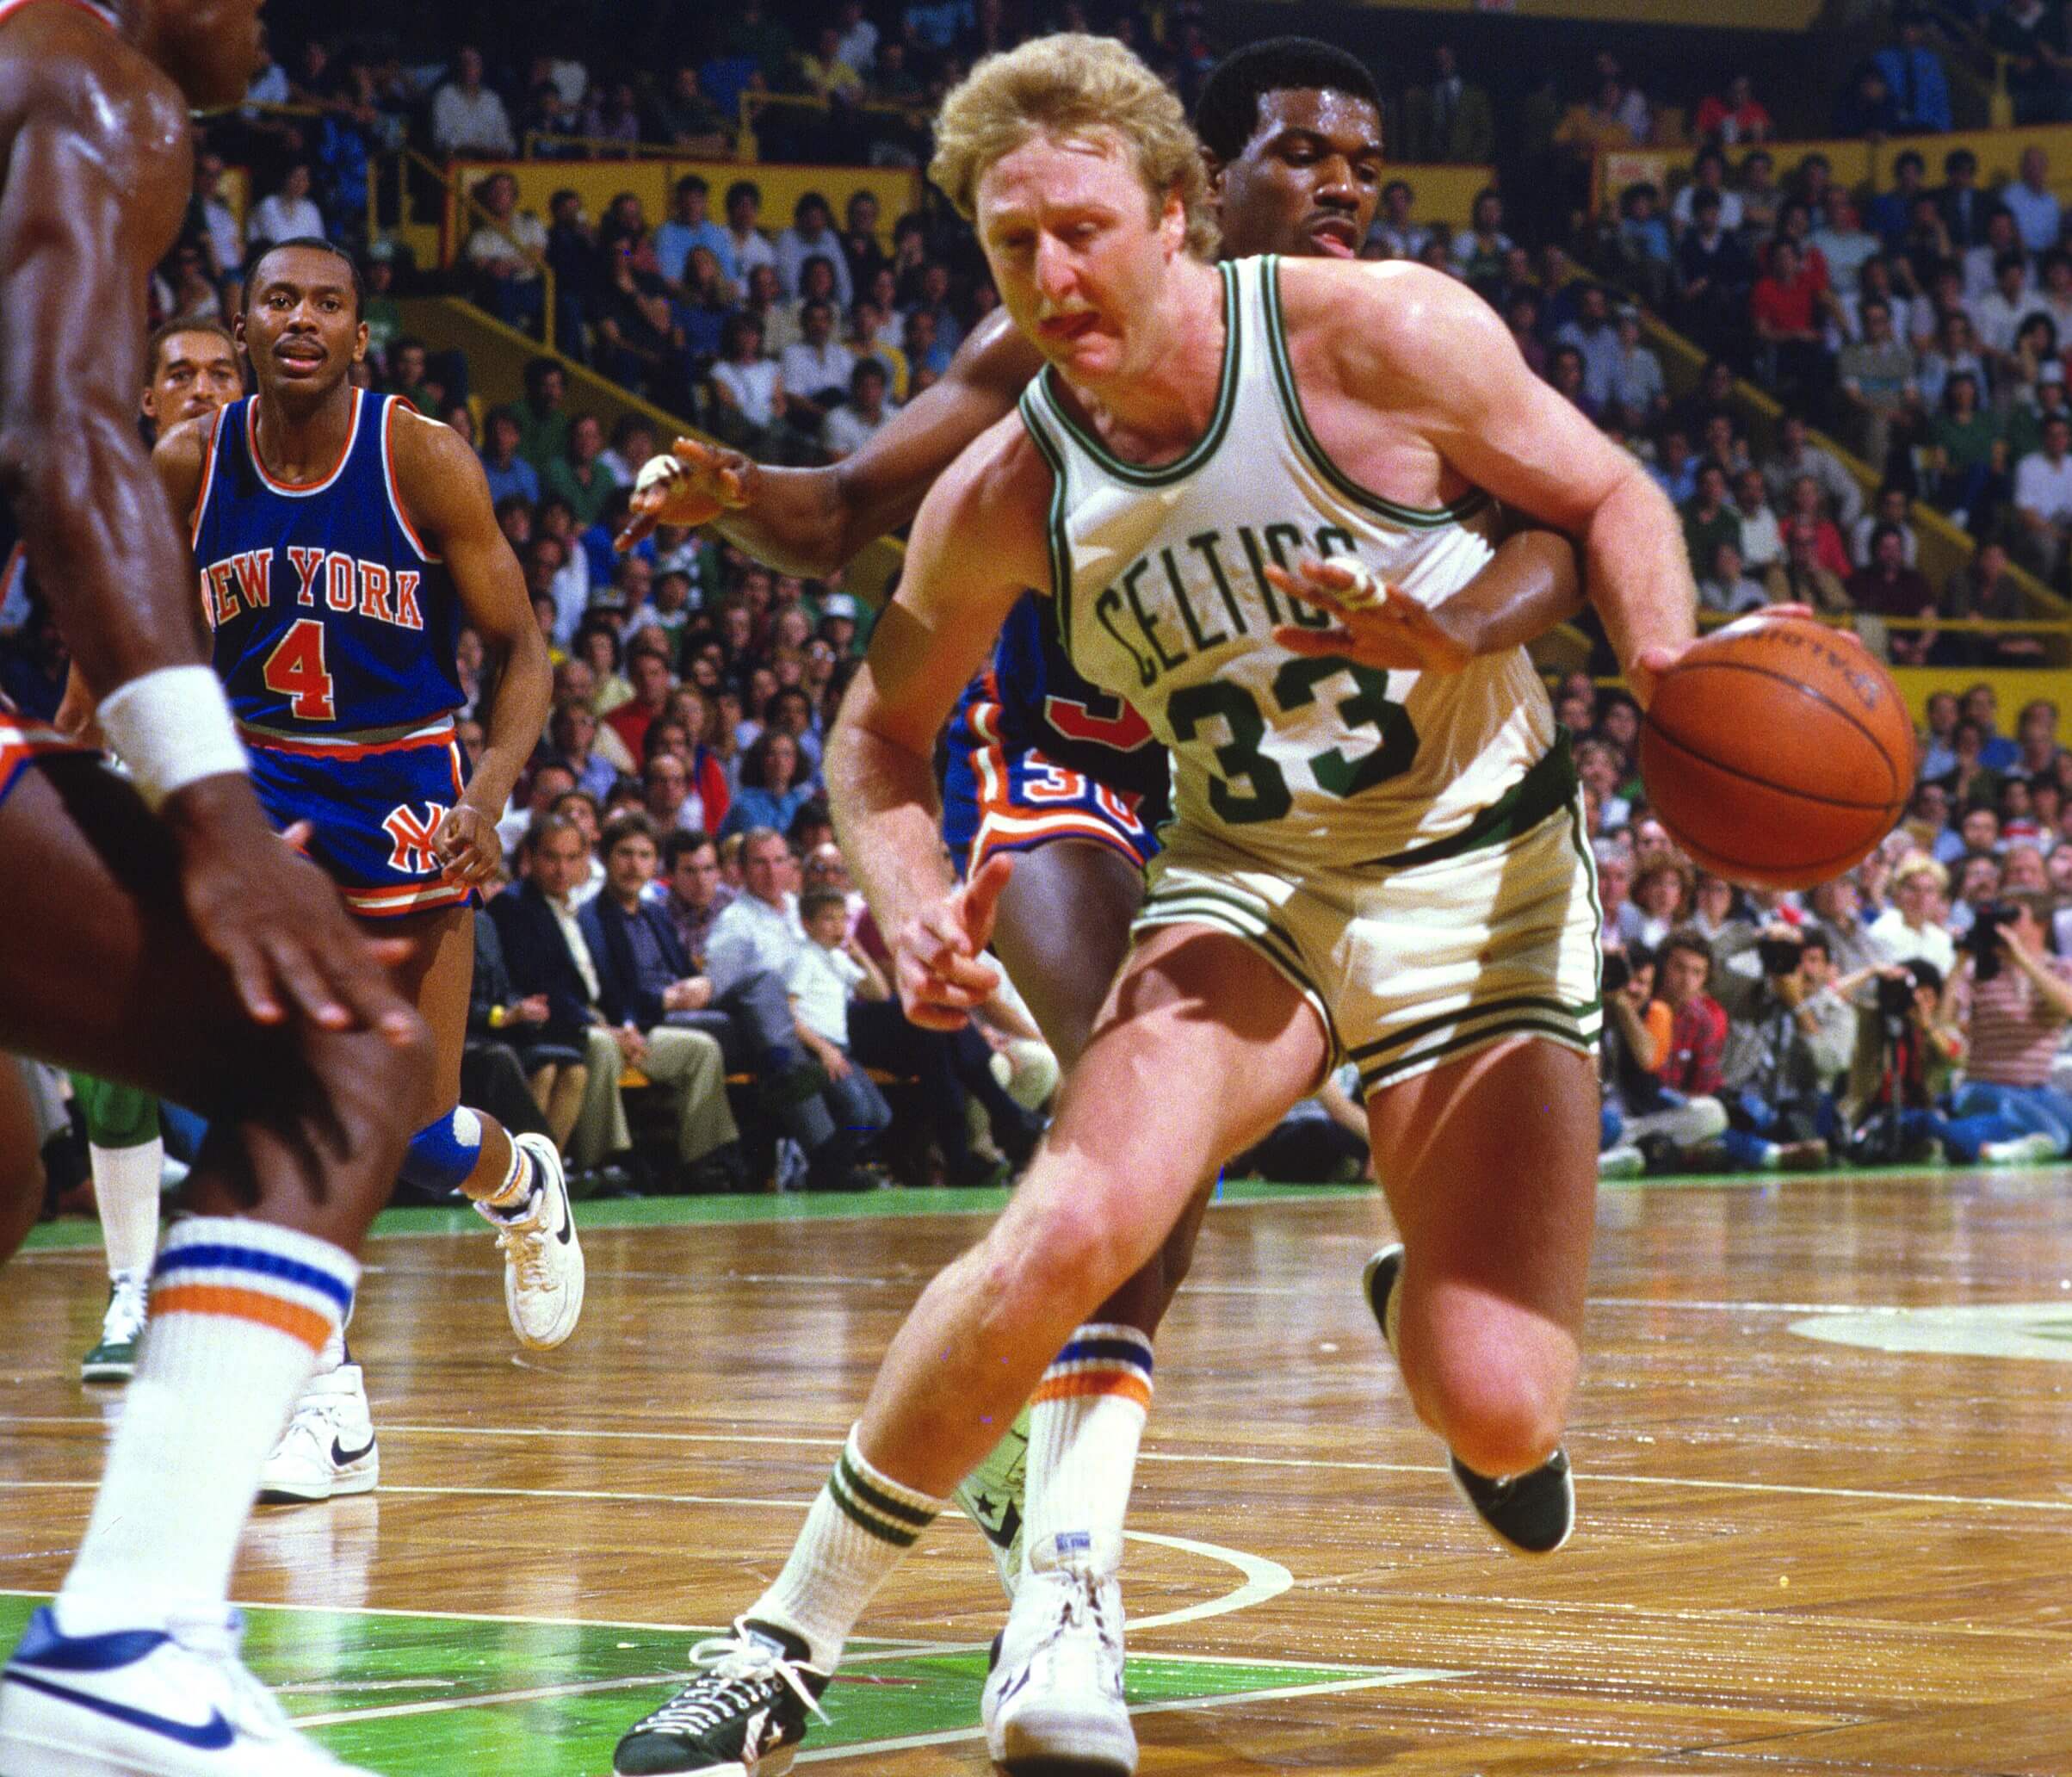 Larry Bird of the Boston Celtics in action against the New York Knicks.